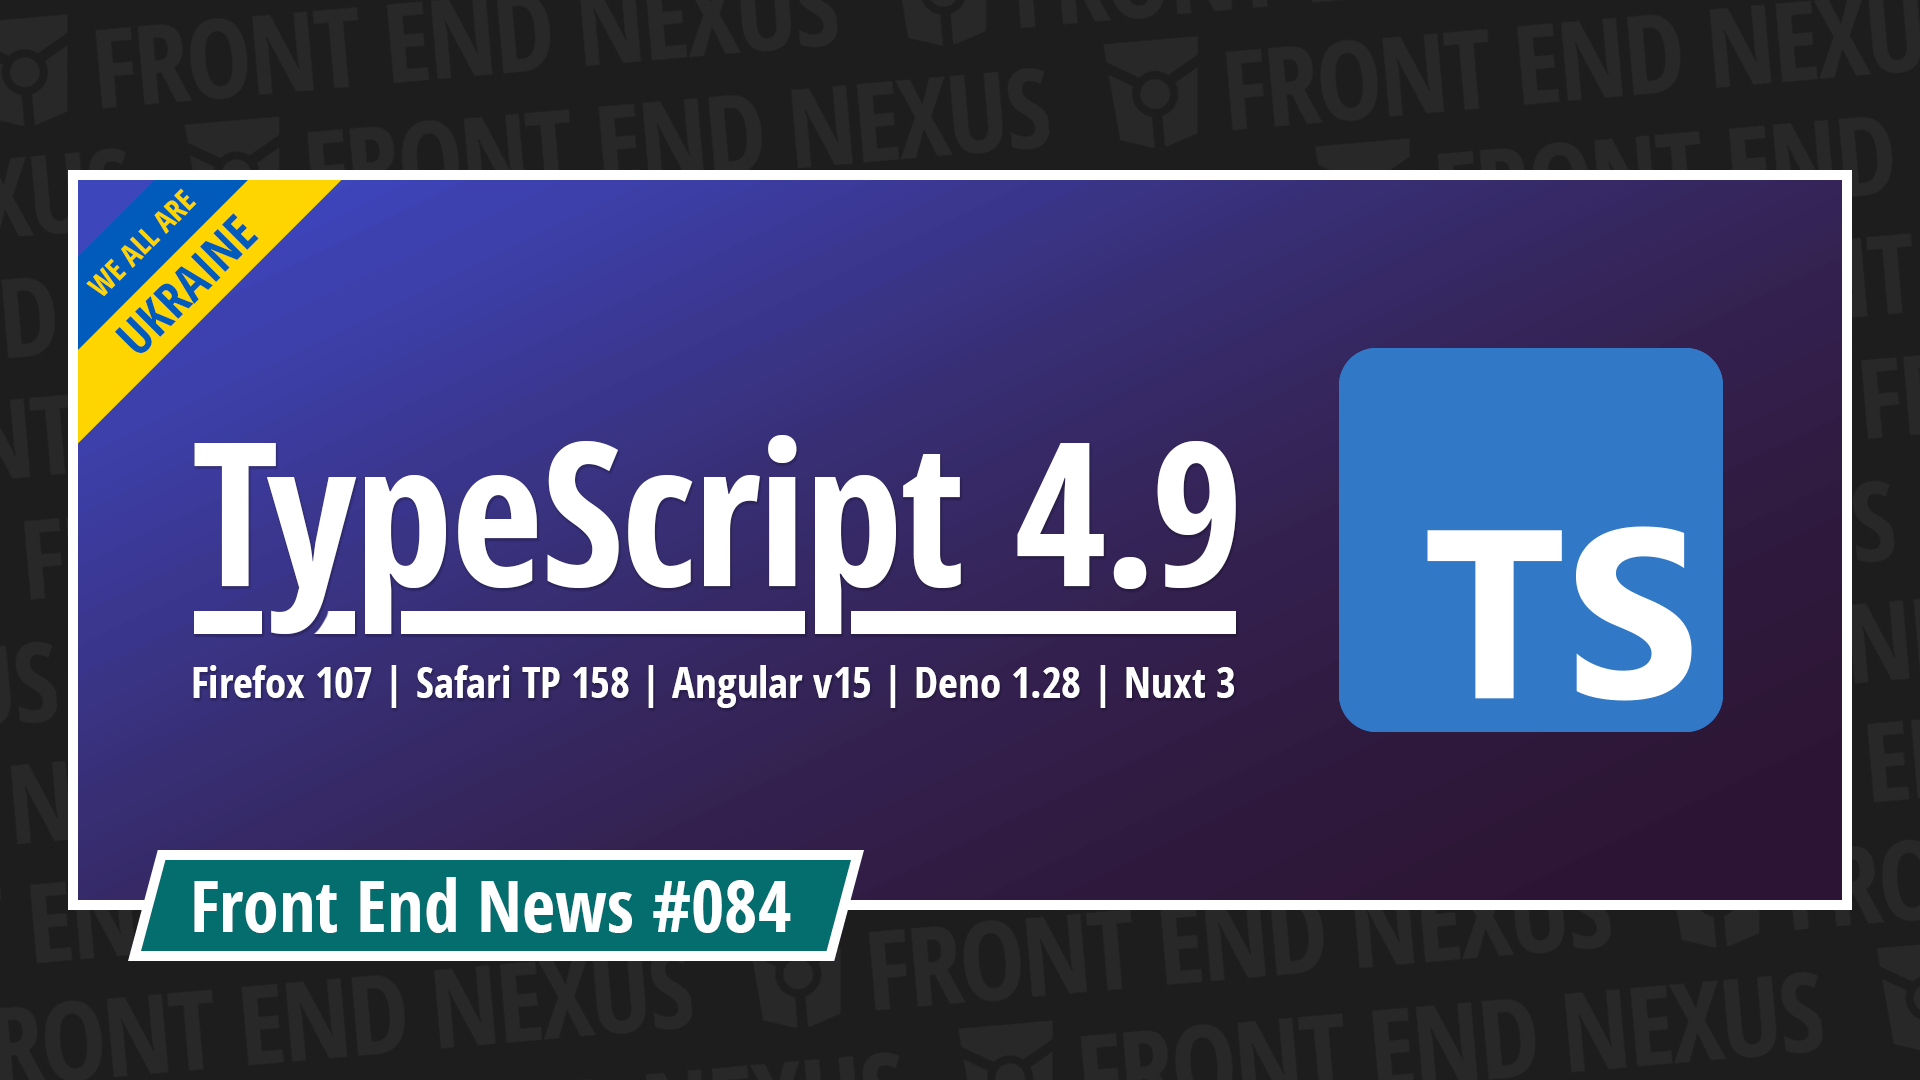 TypeScript 4.9, Firefox 107, Safari TP 158, Angular v15, Deno 1.28, Nuxt 3, and more | Front End News #084